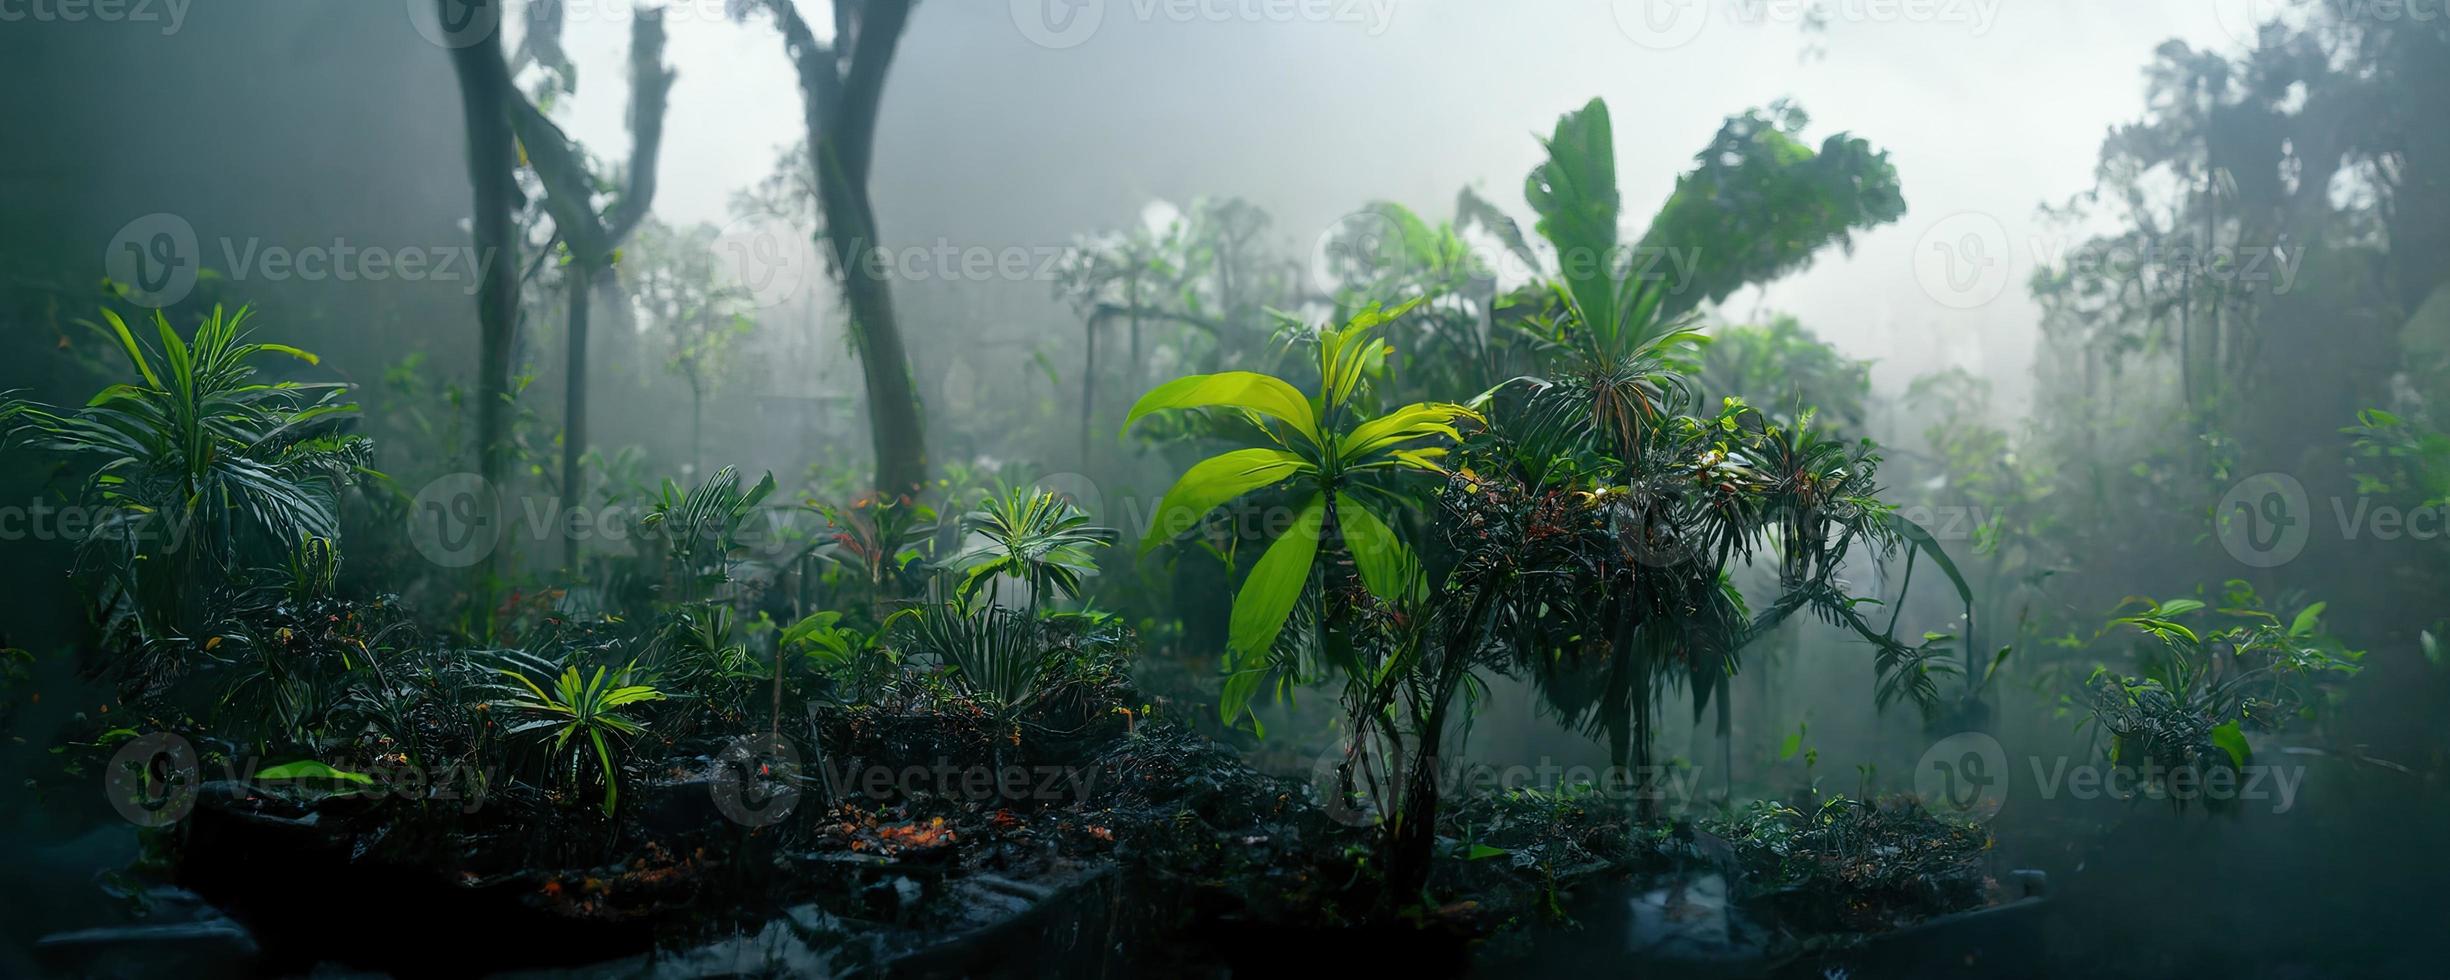 dimmig mörk exotiska tropisk djungel illustration design foto